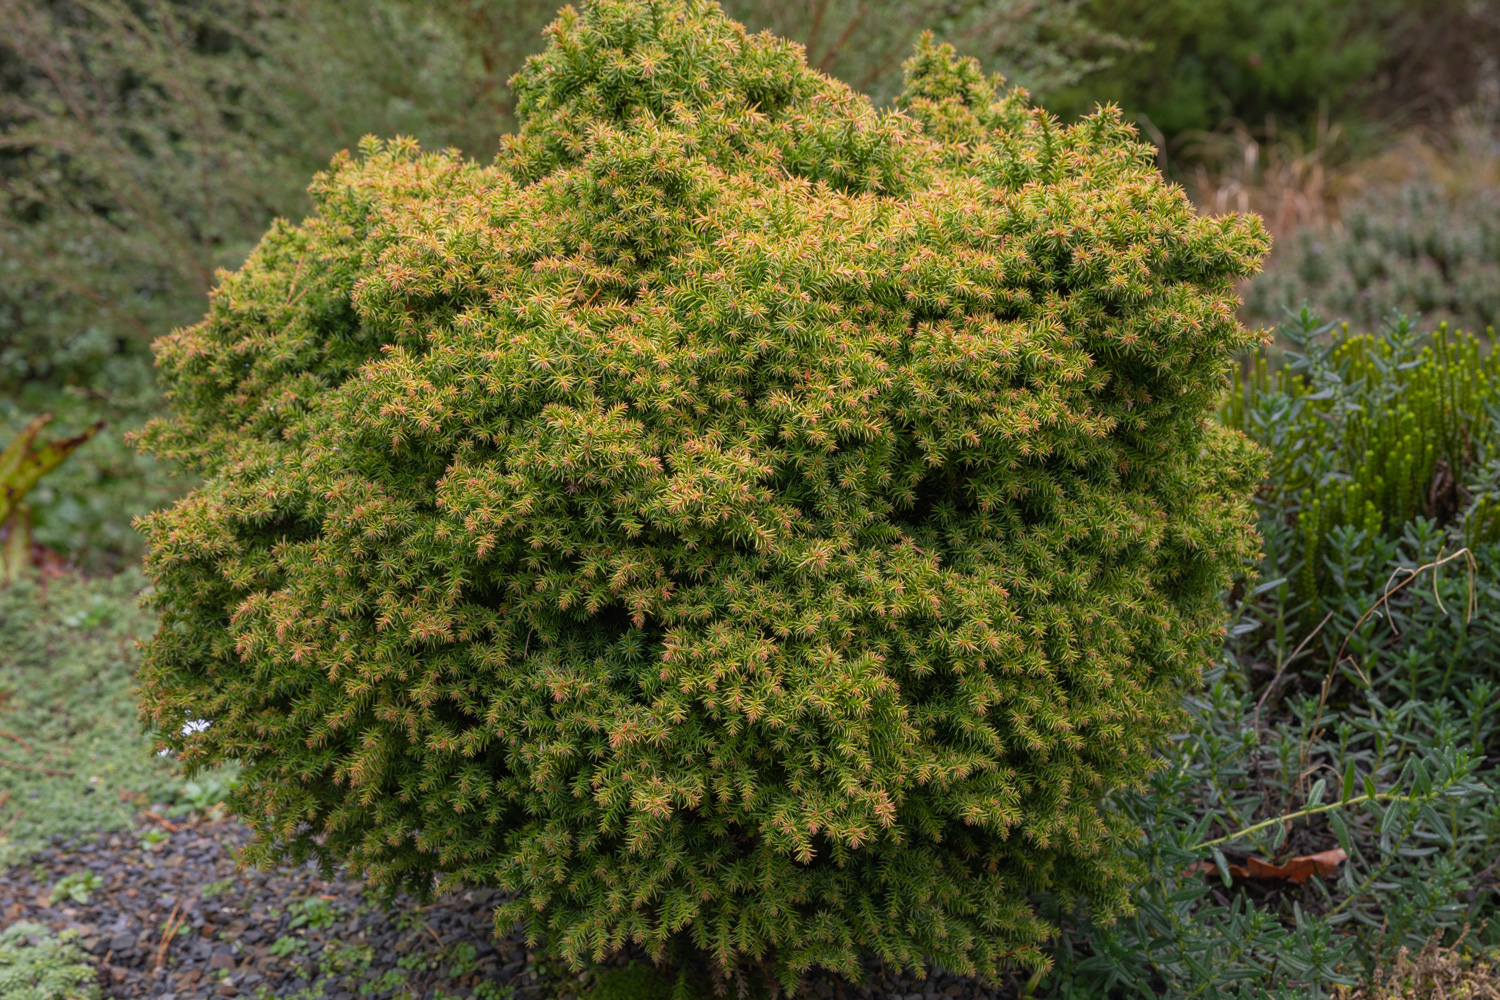 Cryptomeria japonica tilford gold, a species of japanese cedar